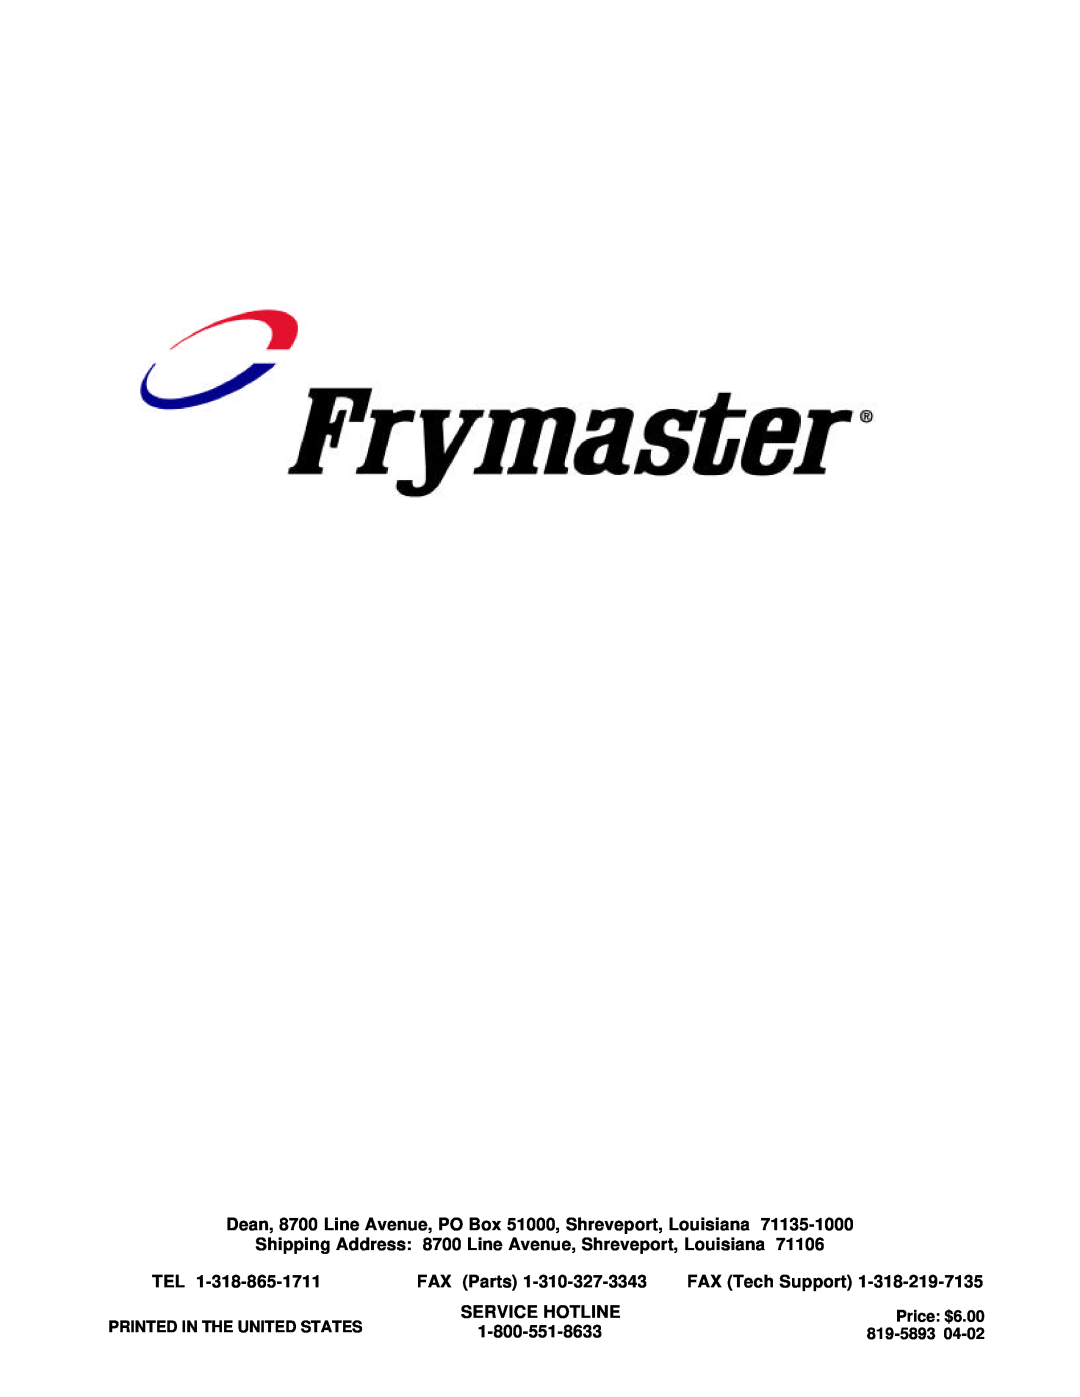 Frymaster CMIII.5 manual Shipping Address, Line Avenue, Shreveport, Louisiana, FAX Parts, FAX Tech Support, Service Hotline 